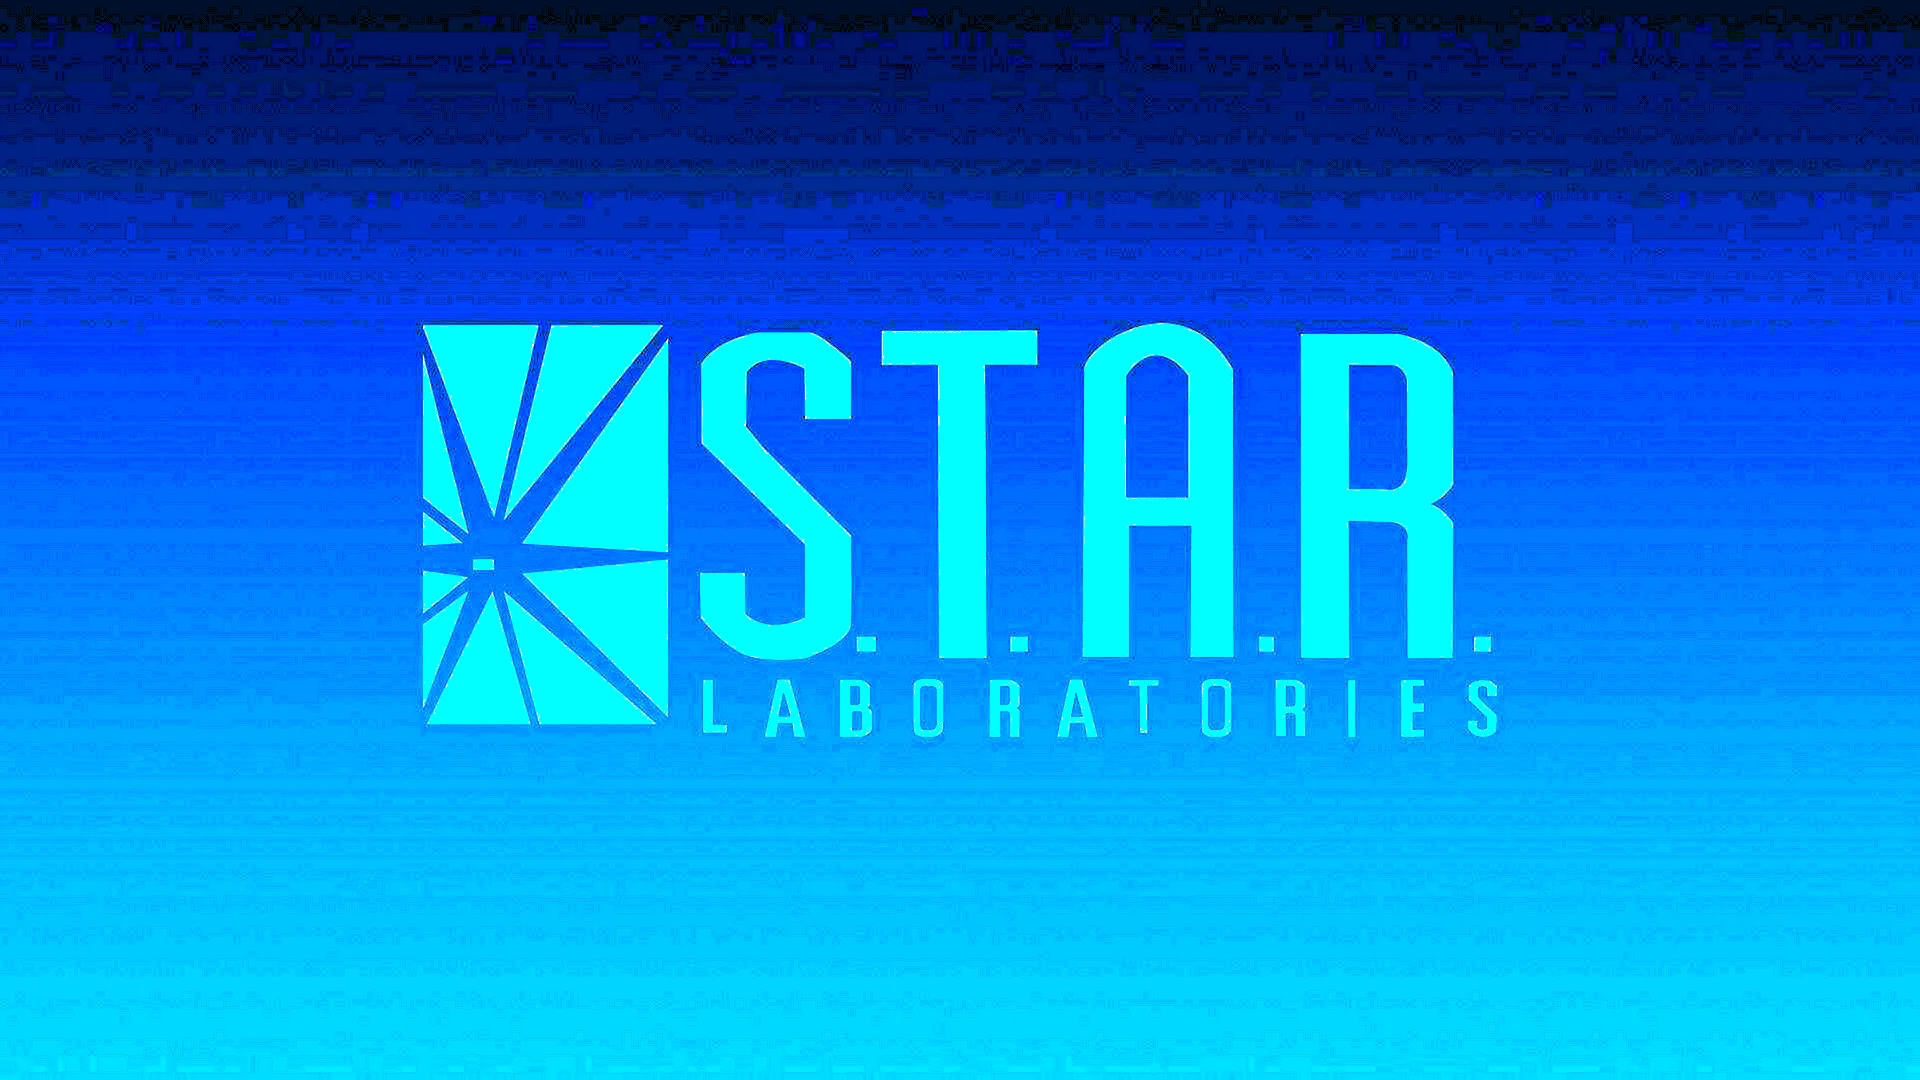 Star Laboratories Wallpaper